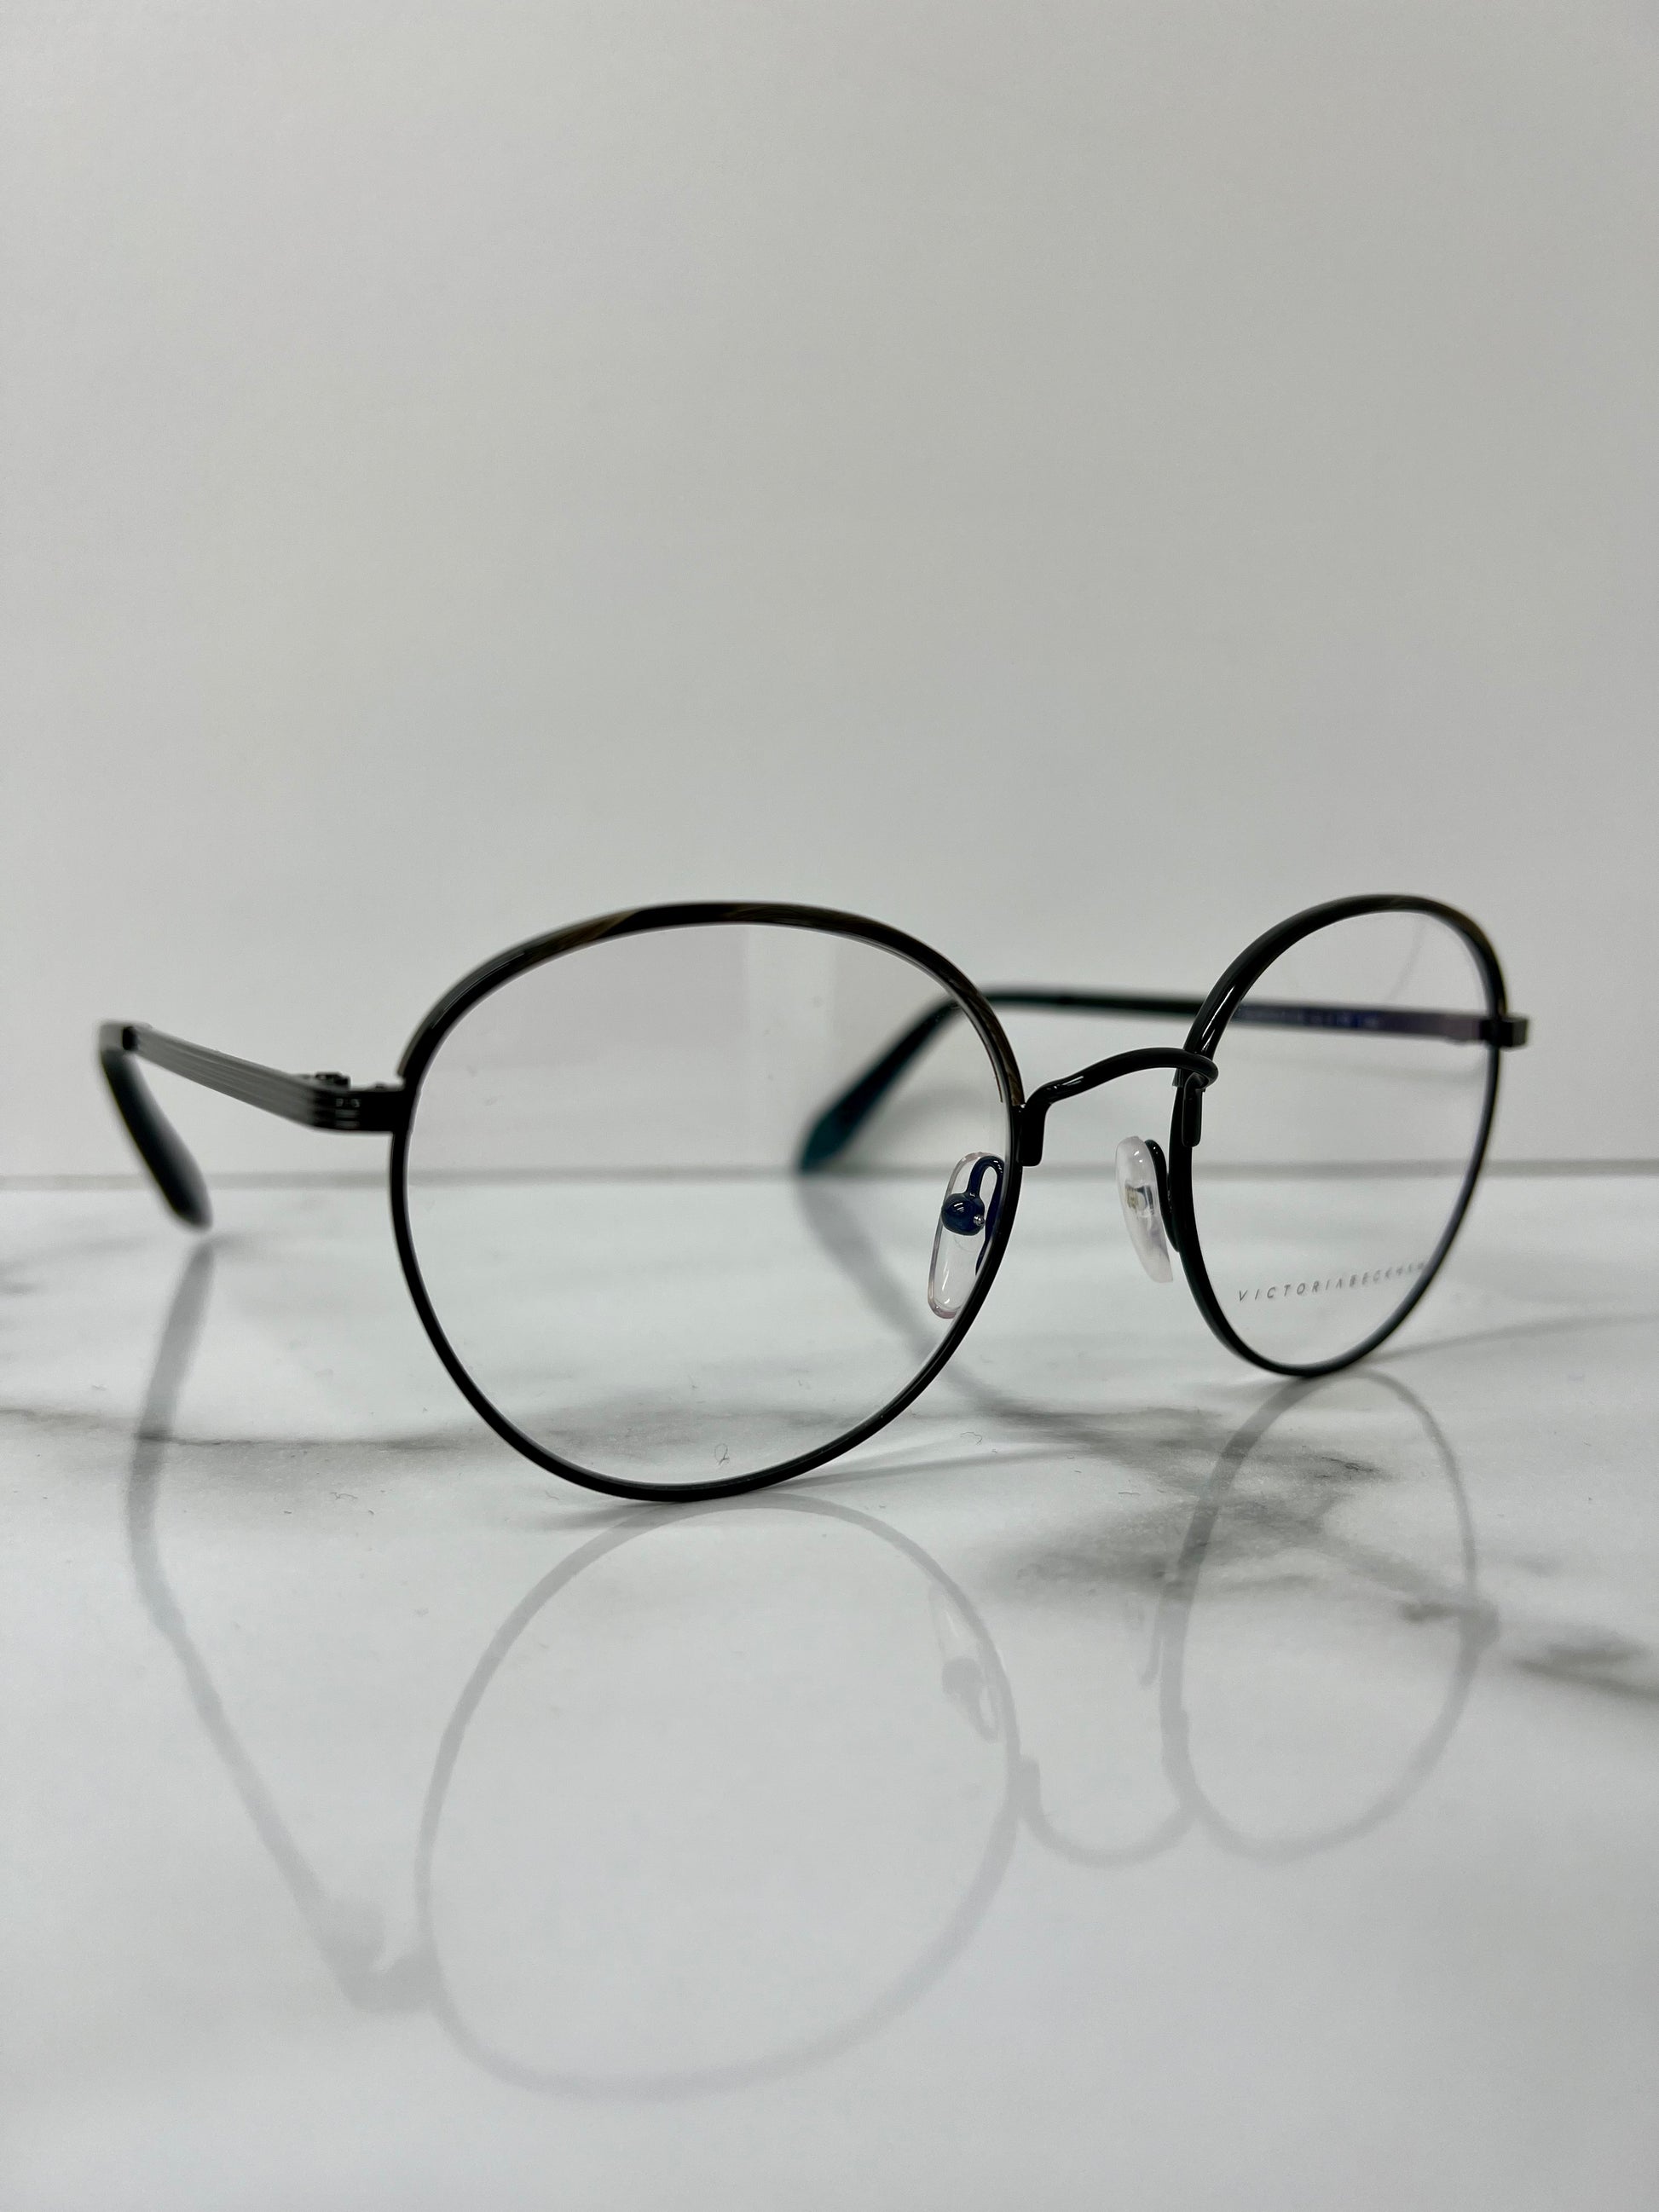 Victoria Beckham Optical Glasses Frames Women Round Black Eyeglasses VBOPT221